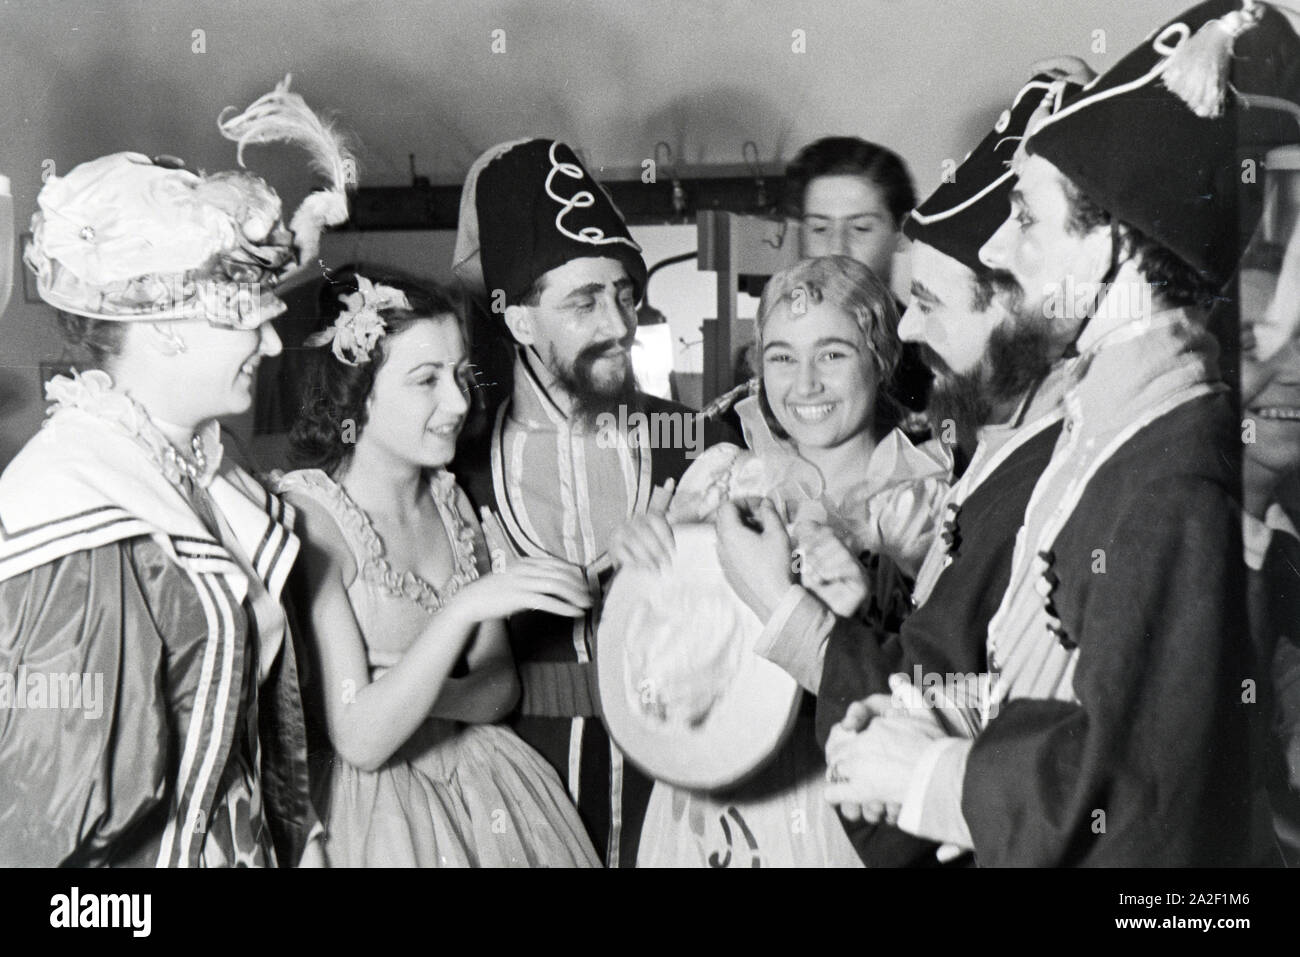 Kostümierte Opernsänger in der Umkleidekabine im Opernhaus nella Rom; Italien 1940er Jahre. Costume di cantanti lirici in spogliatoio in opera R Foto Stock